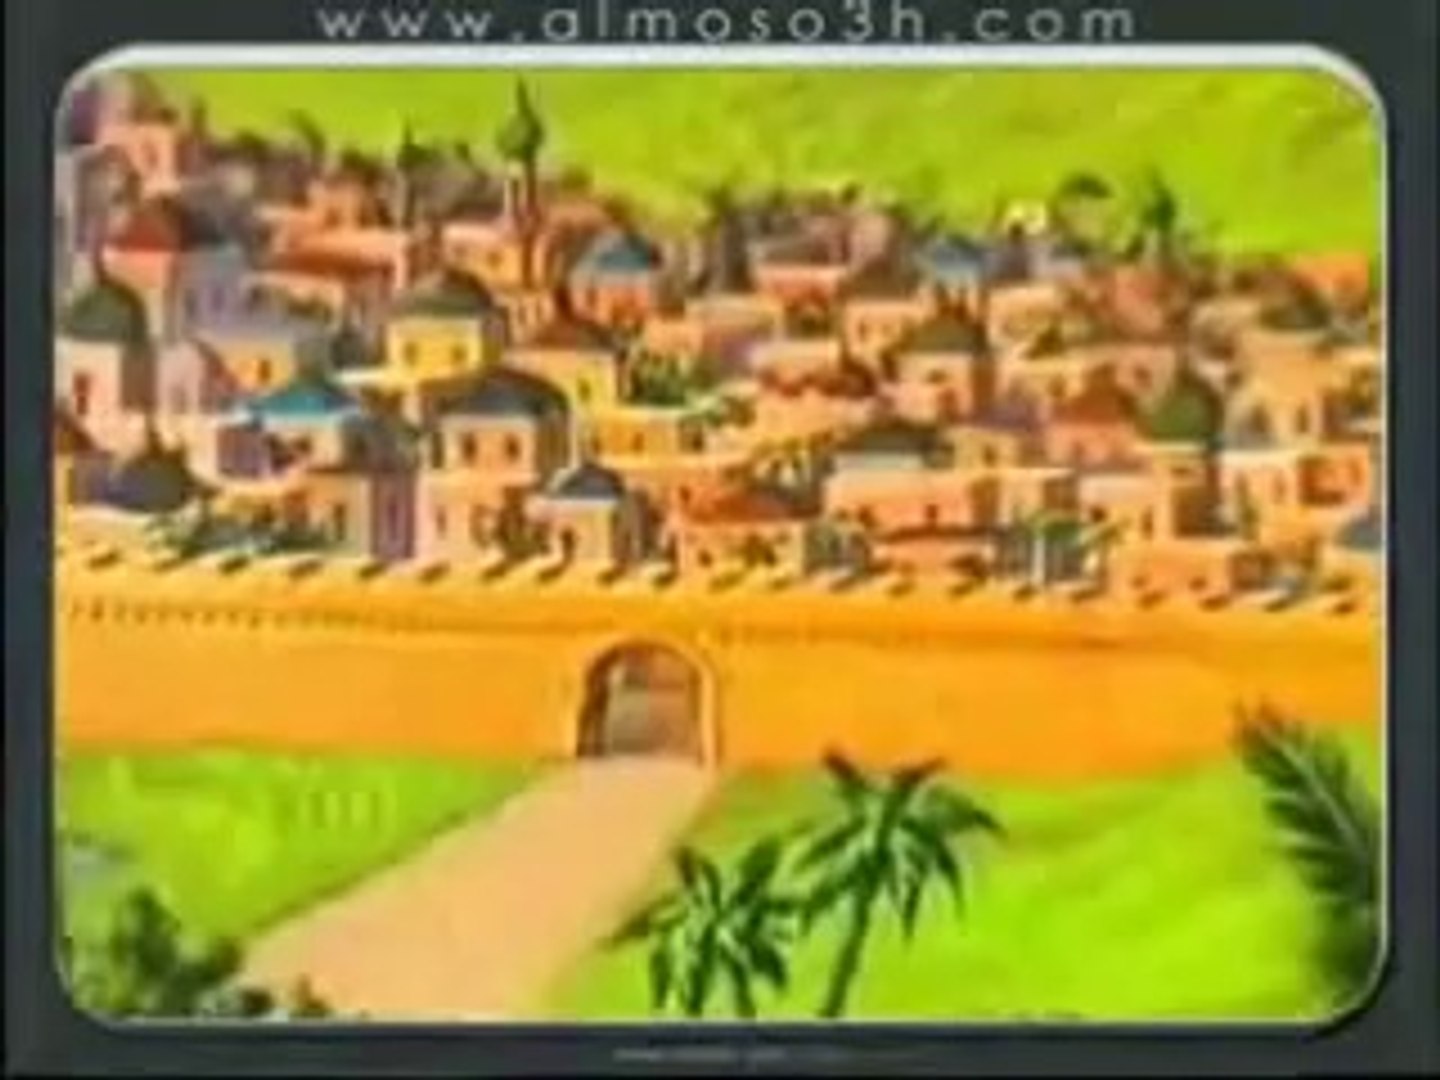 علي بابا فيلم كرتون إسلامي بدون موسيقى Video Dailymotion